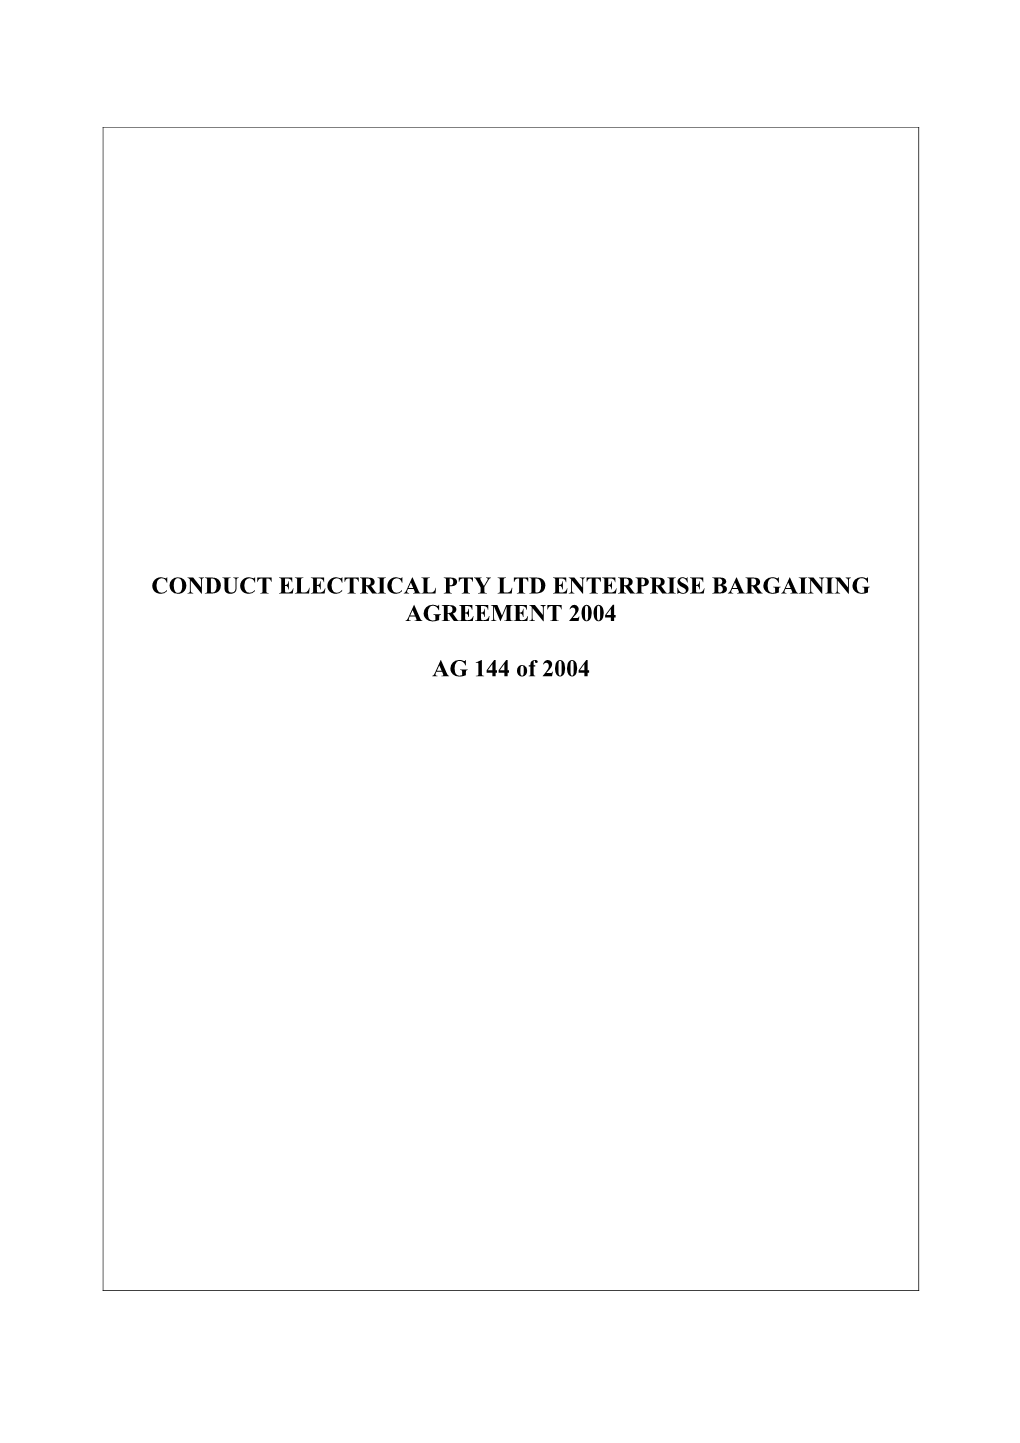 Conduct Electrical Pty Ltd Enterprise Bargaining Agreement 2004